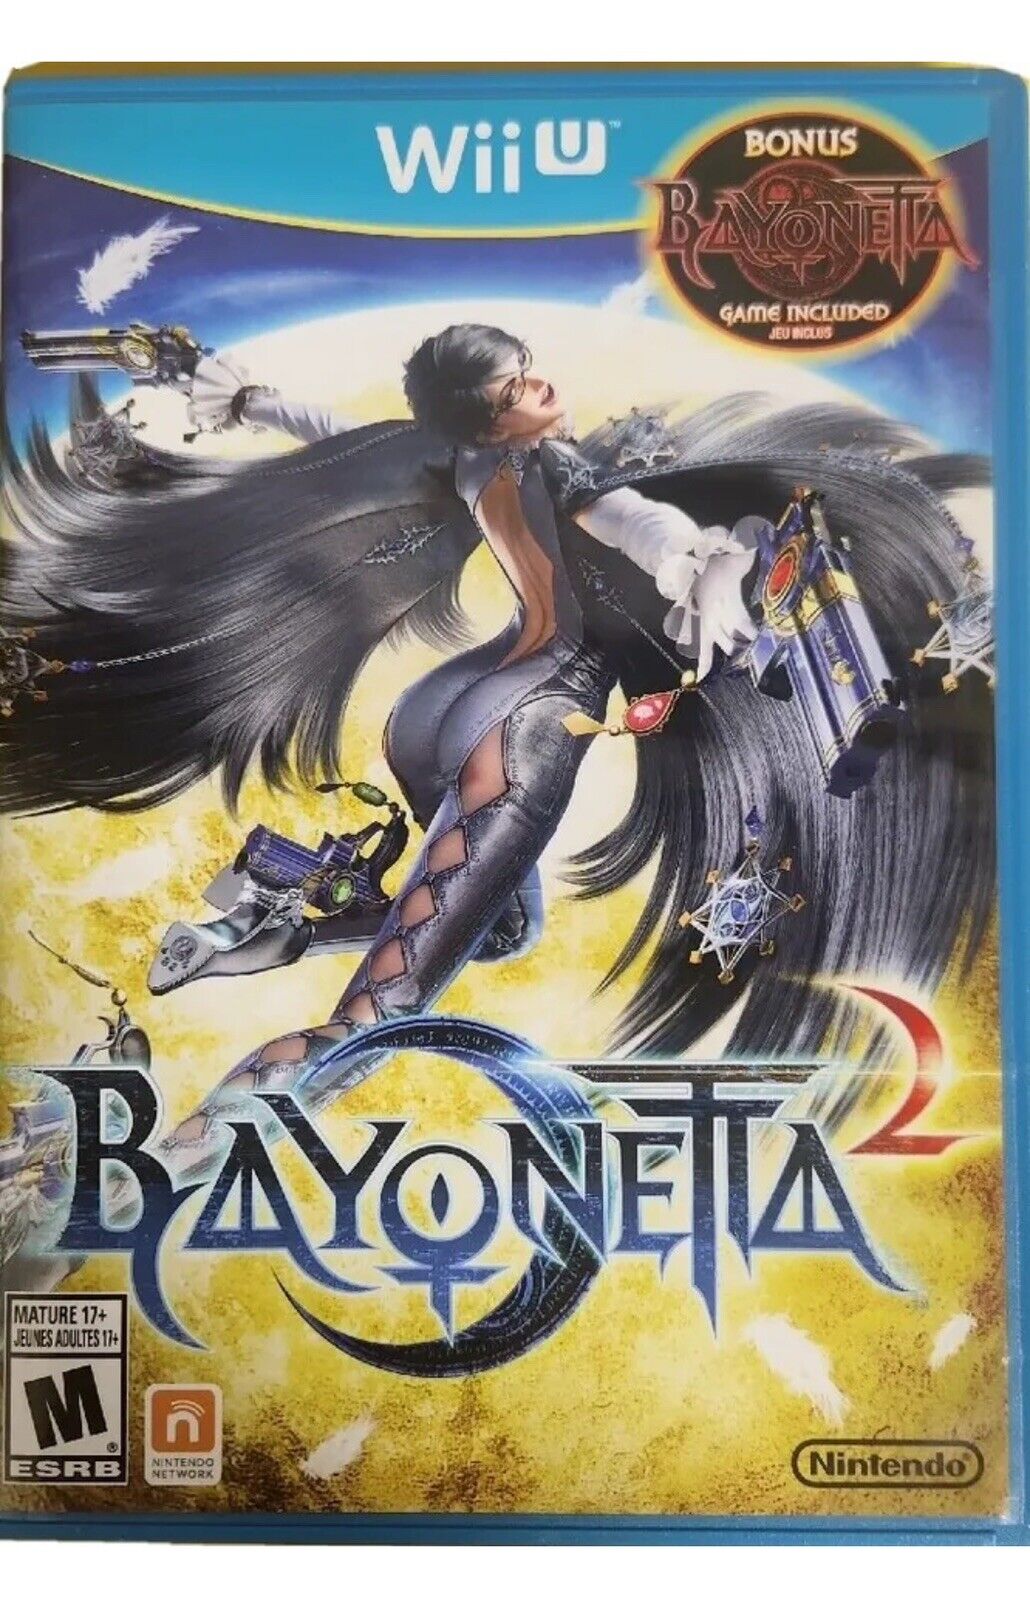 Bayonetta 2 Nintendo Wii U, 2014 Includes Bonus Bayontra 1 Tested Complete MINT